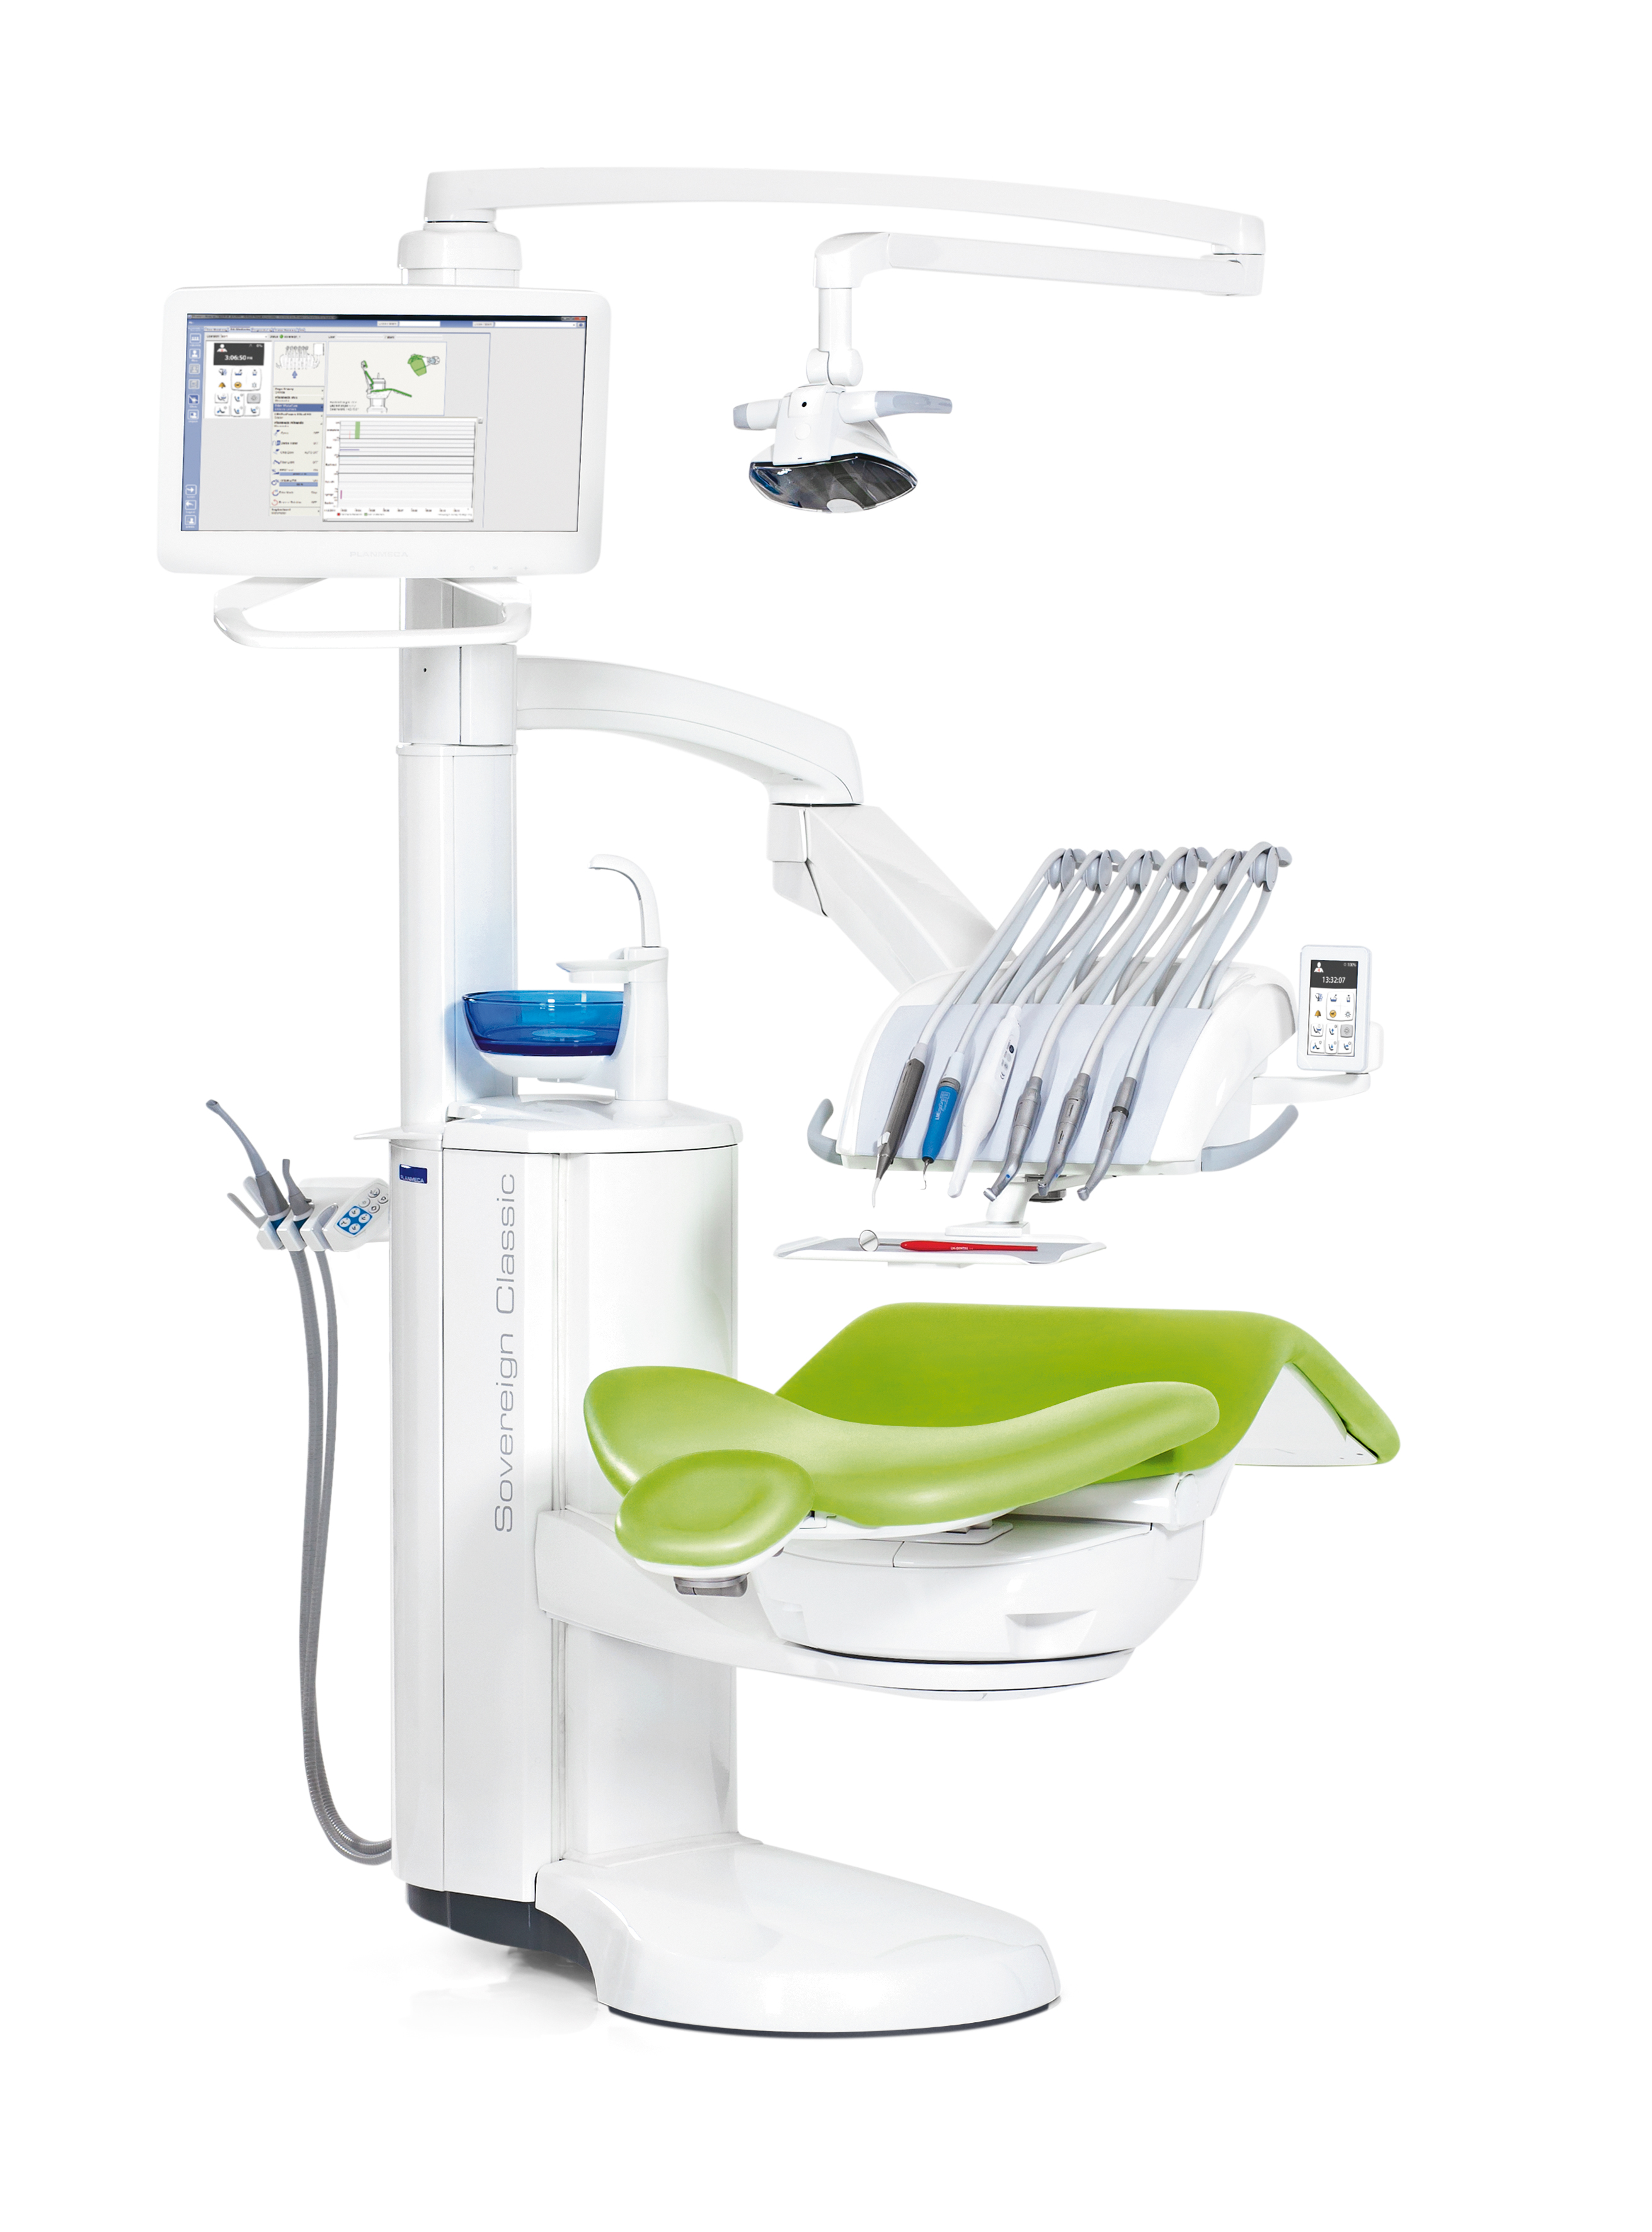 Planmeca introduces a radically new dental unit concept – Planmeca Sovereign® Classic